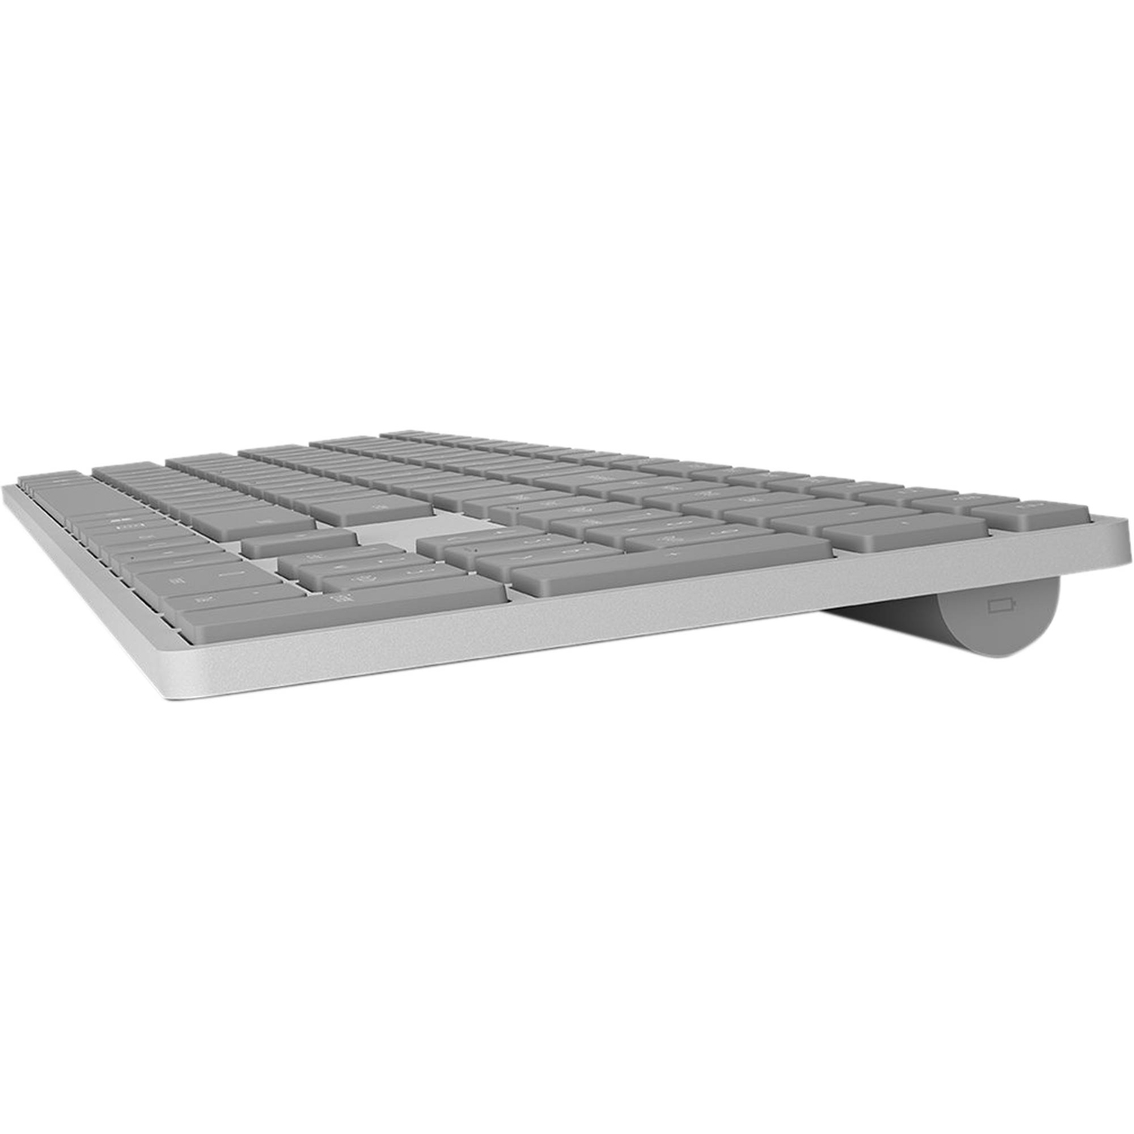 Microsoft Surface Keyboard - Image 3 of 3